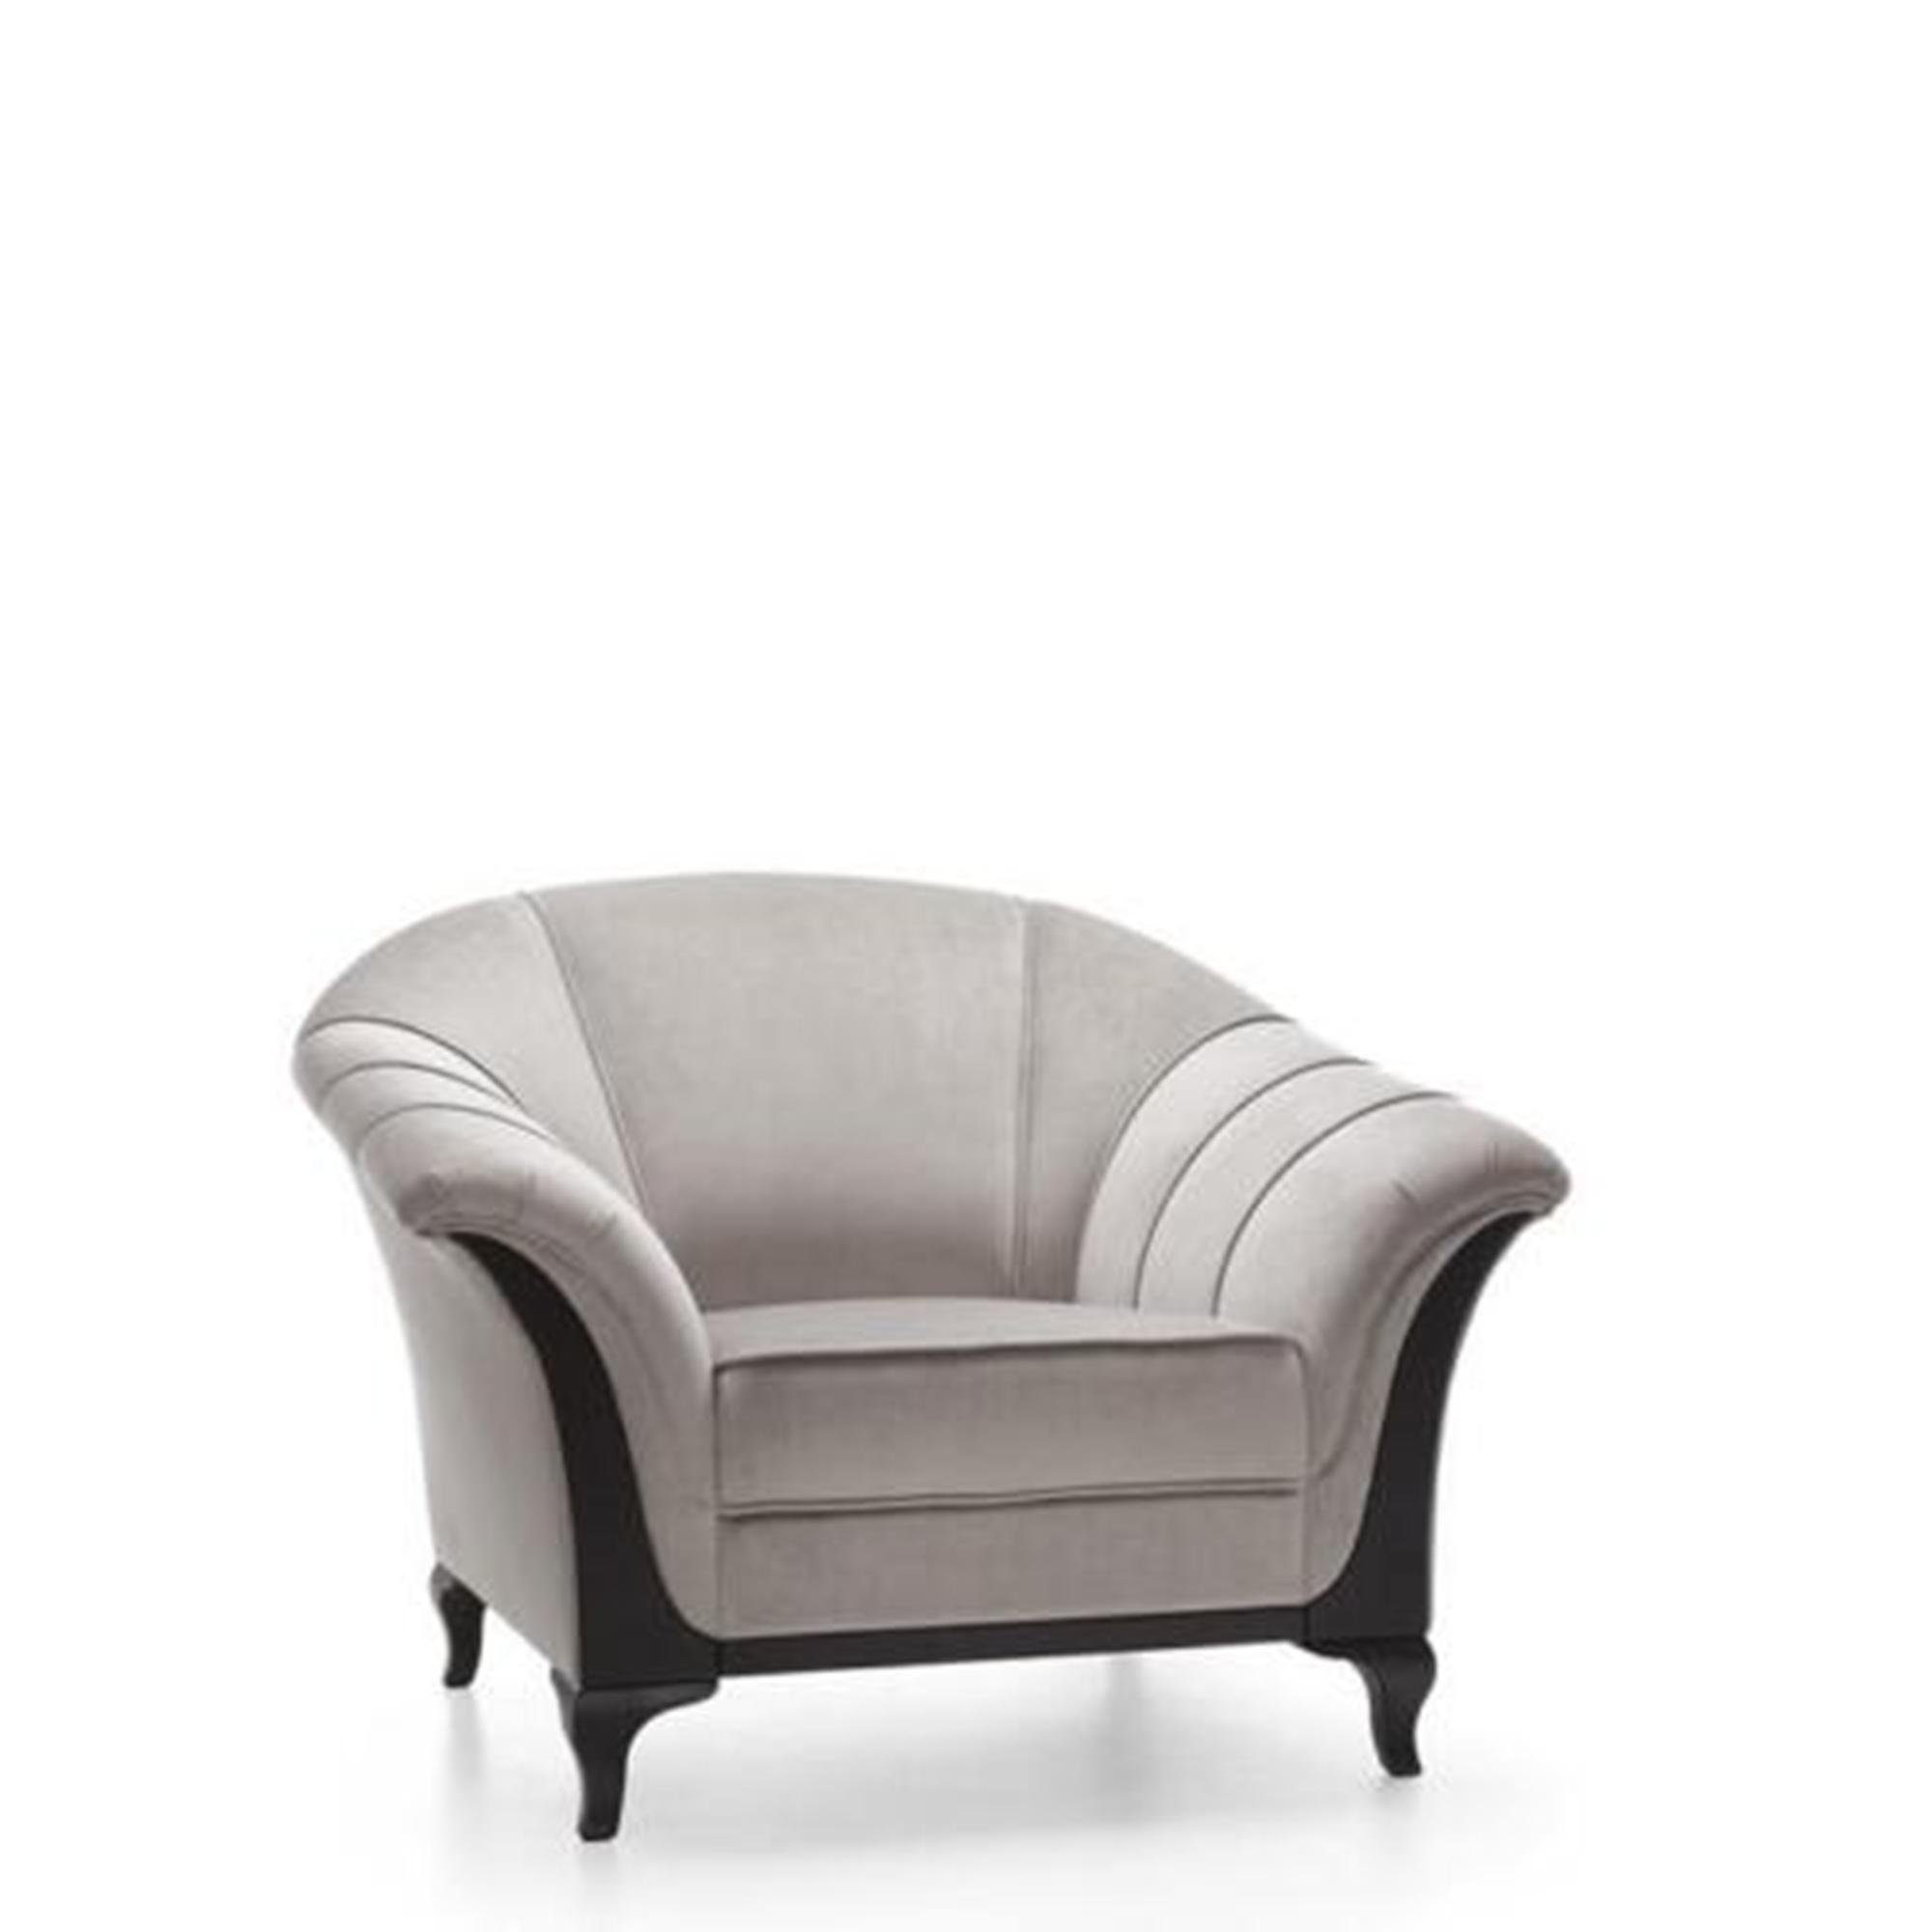 JVmoebel Sofa Moderner grauer luxus Sessel Relax Möbel Design Neu, Made in Europe | Alle Sofas